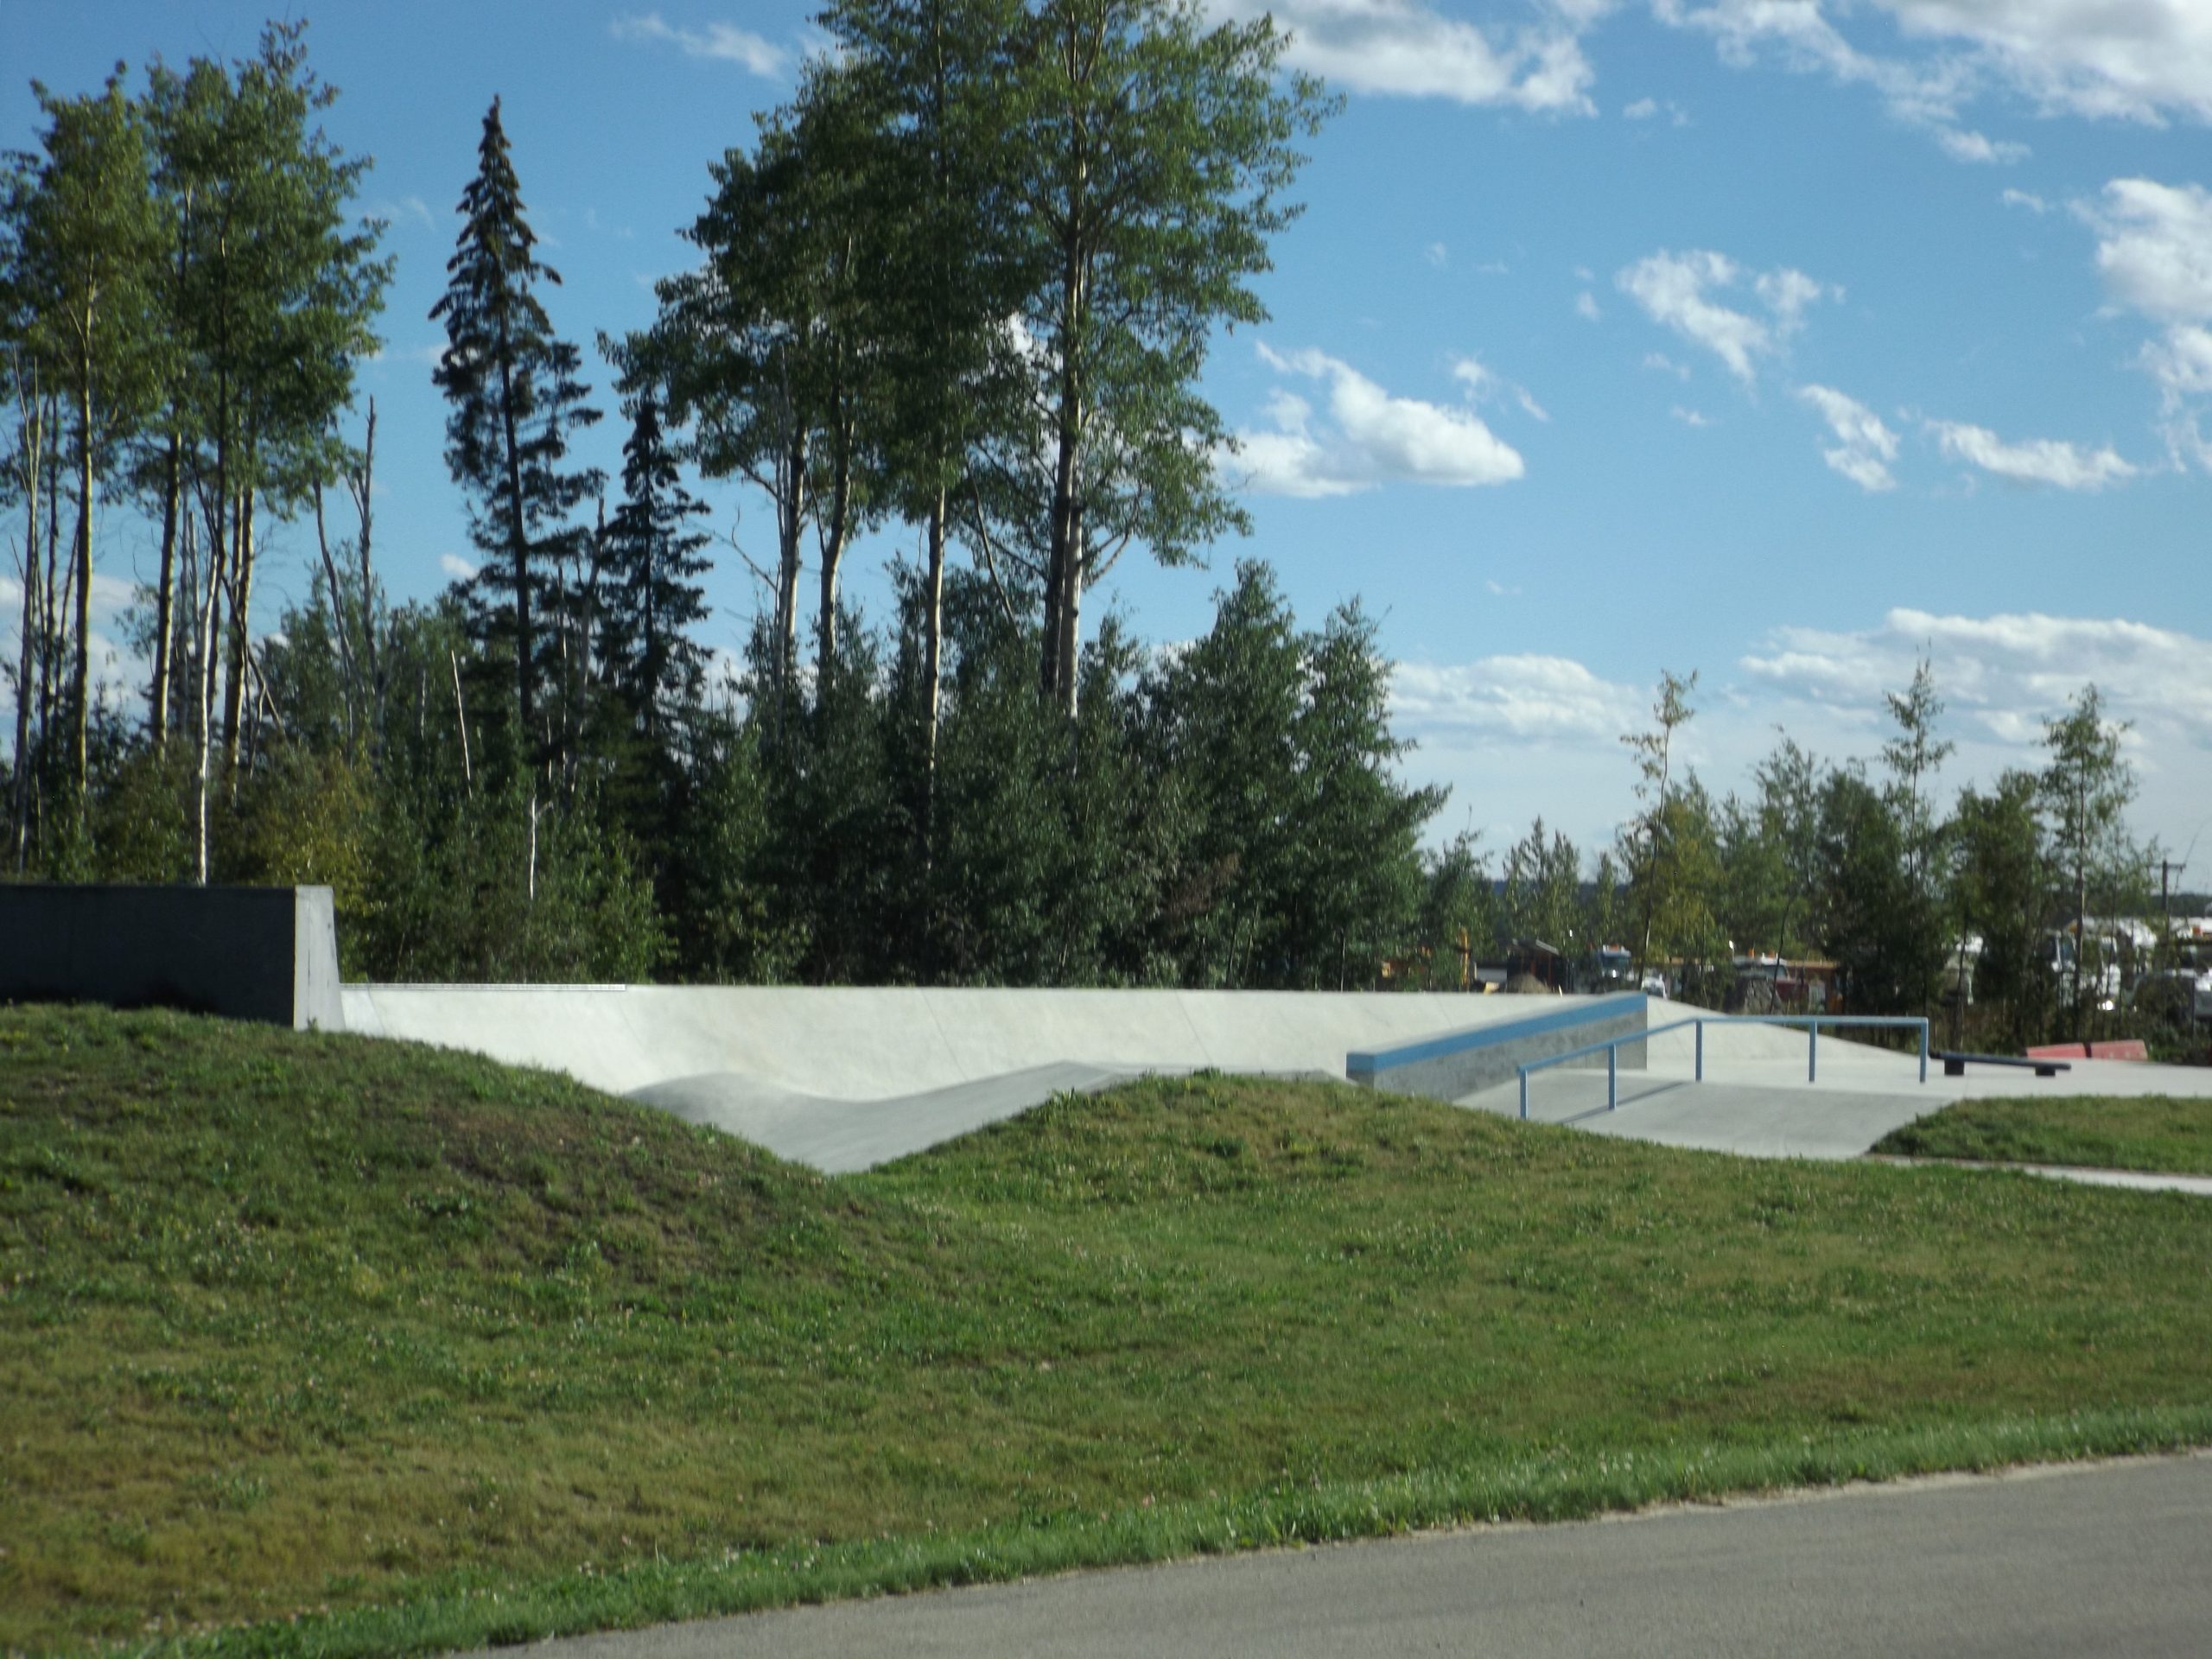 Lions Skateboard Park